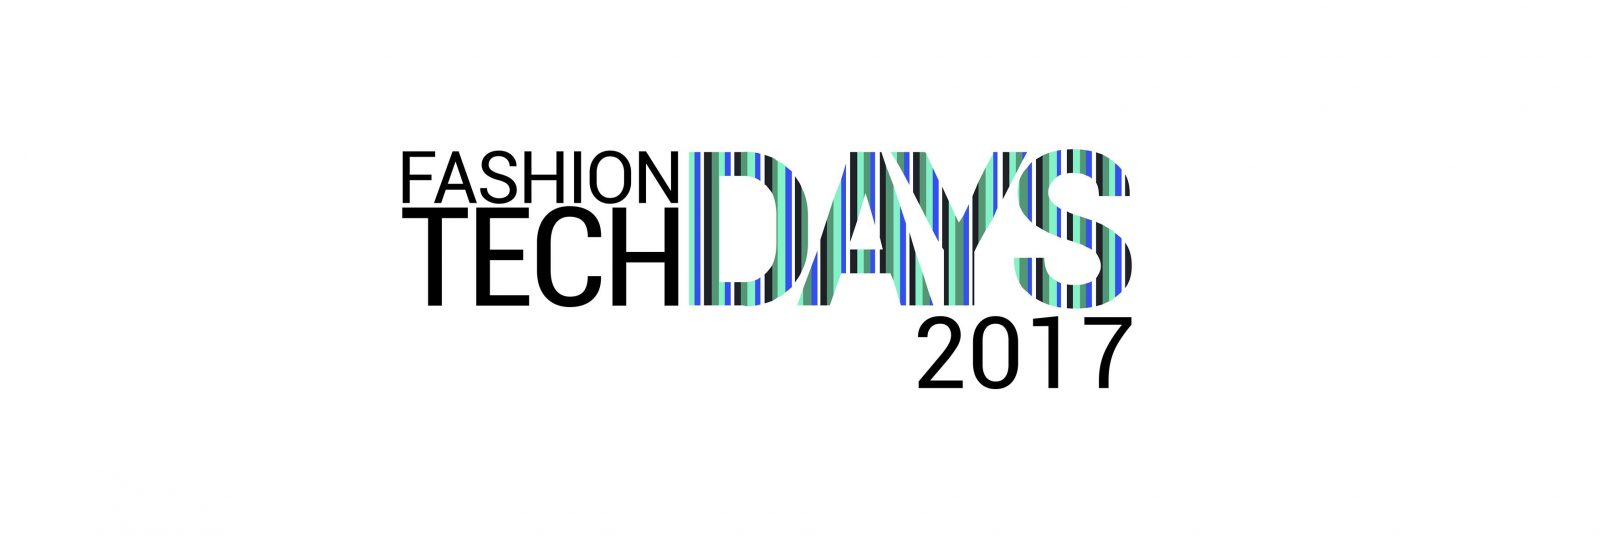 Fashion Tech Days 2017 Roubaix